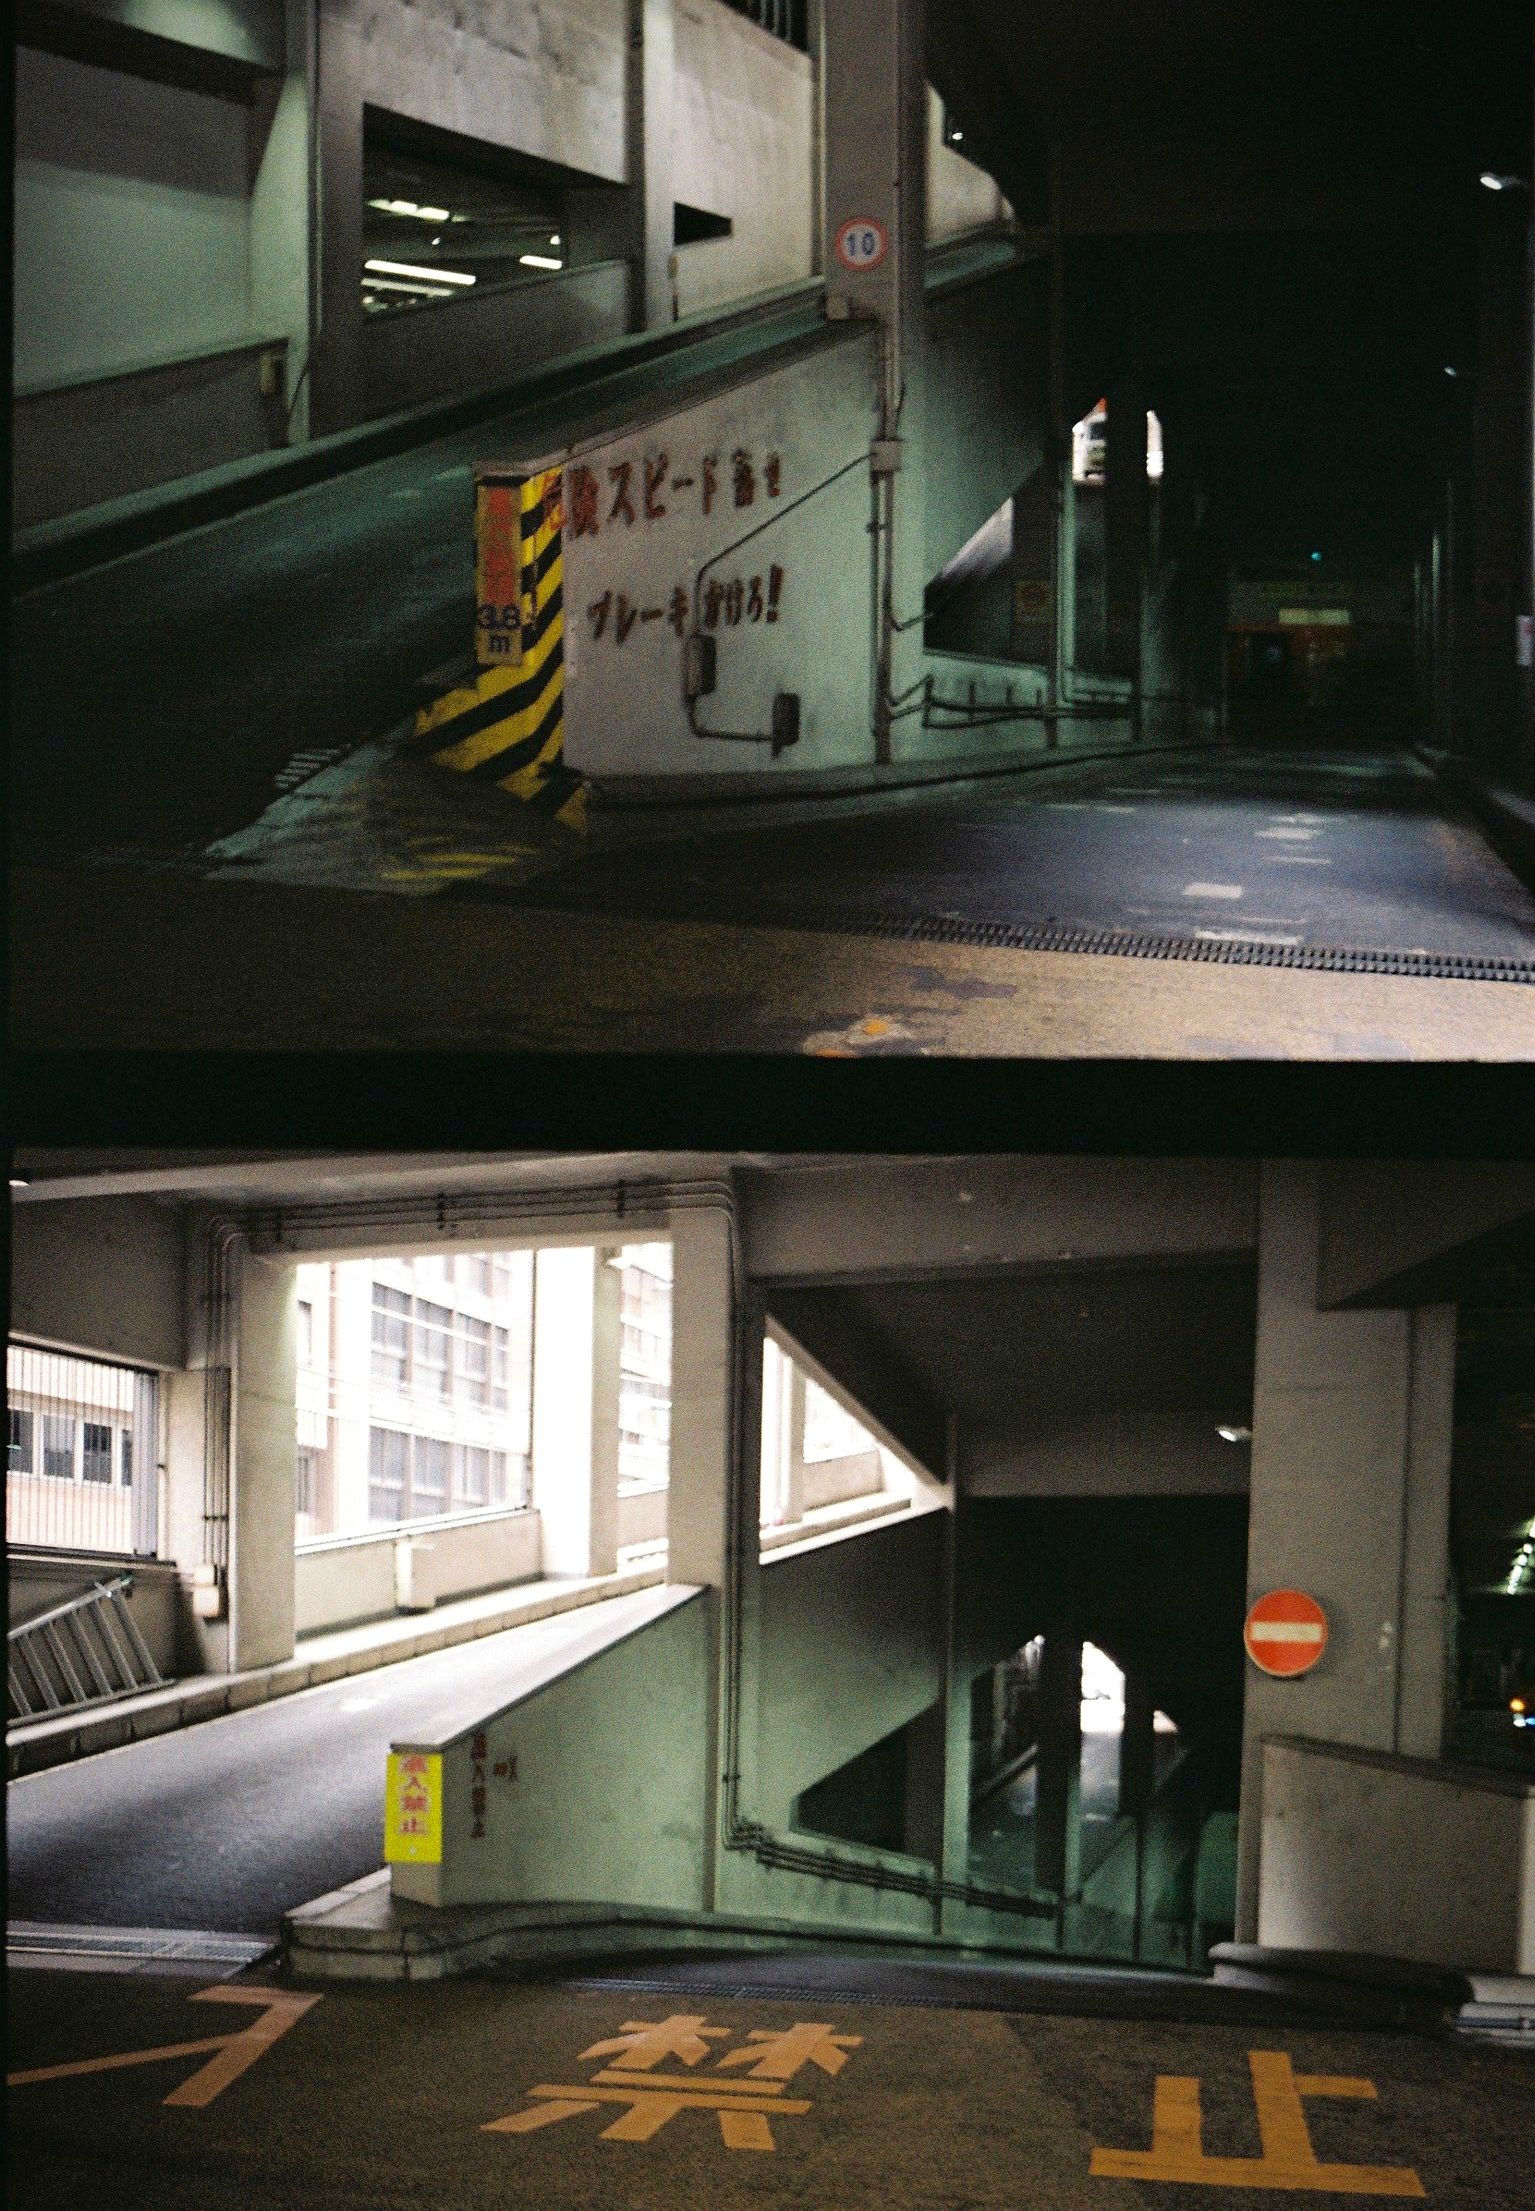 Multi level parking in Tokyo [Olympus pen ee3, Kodak Gold]